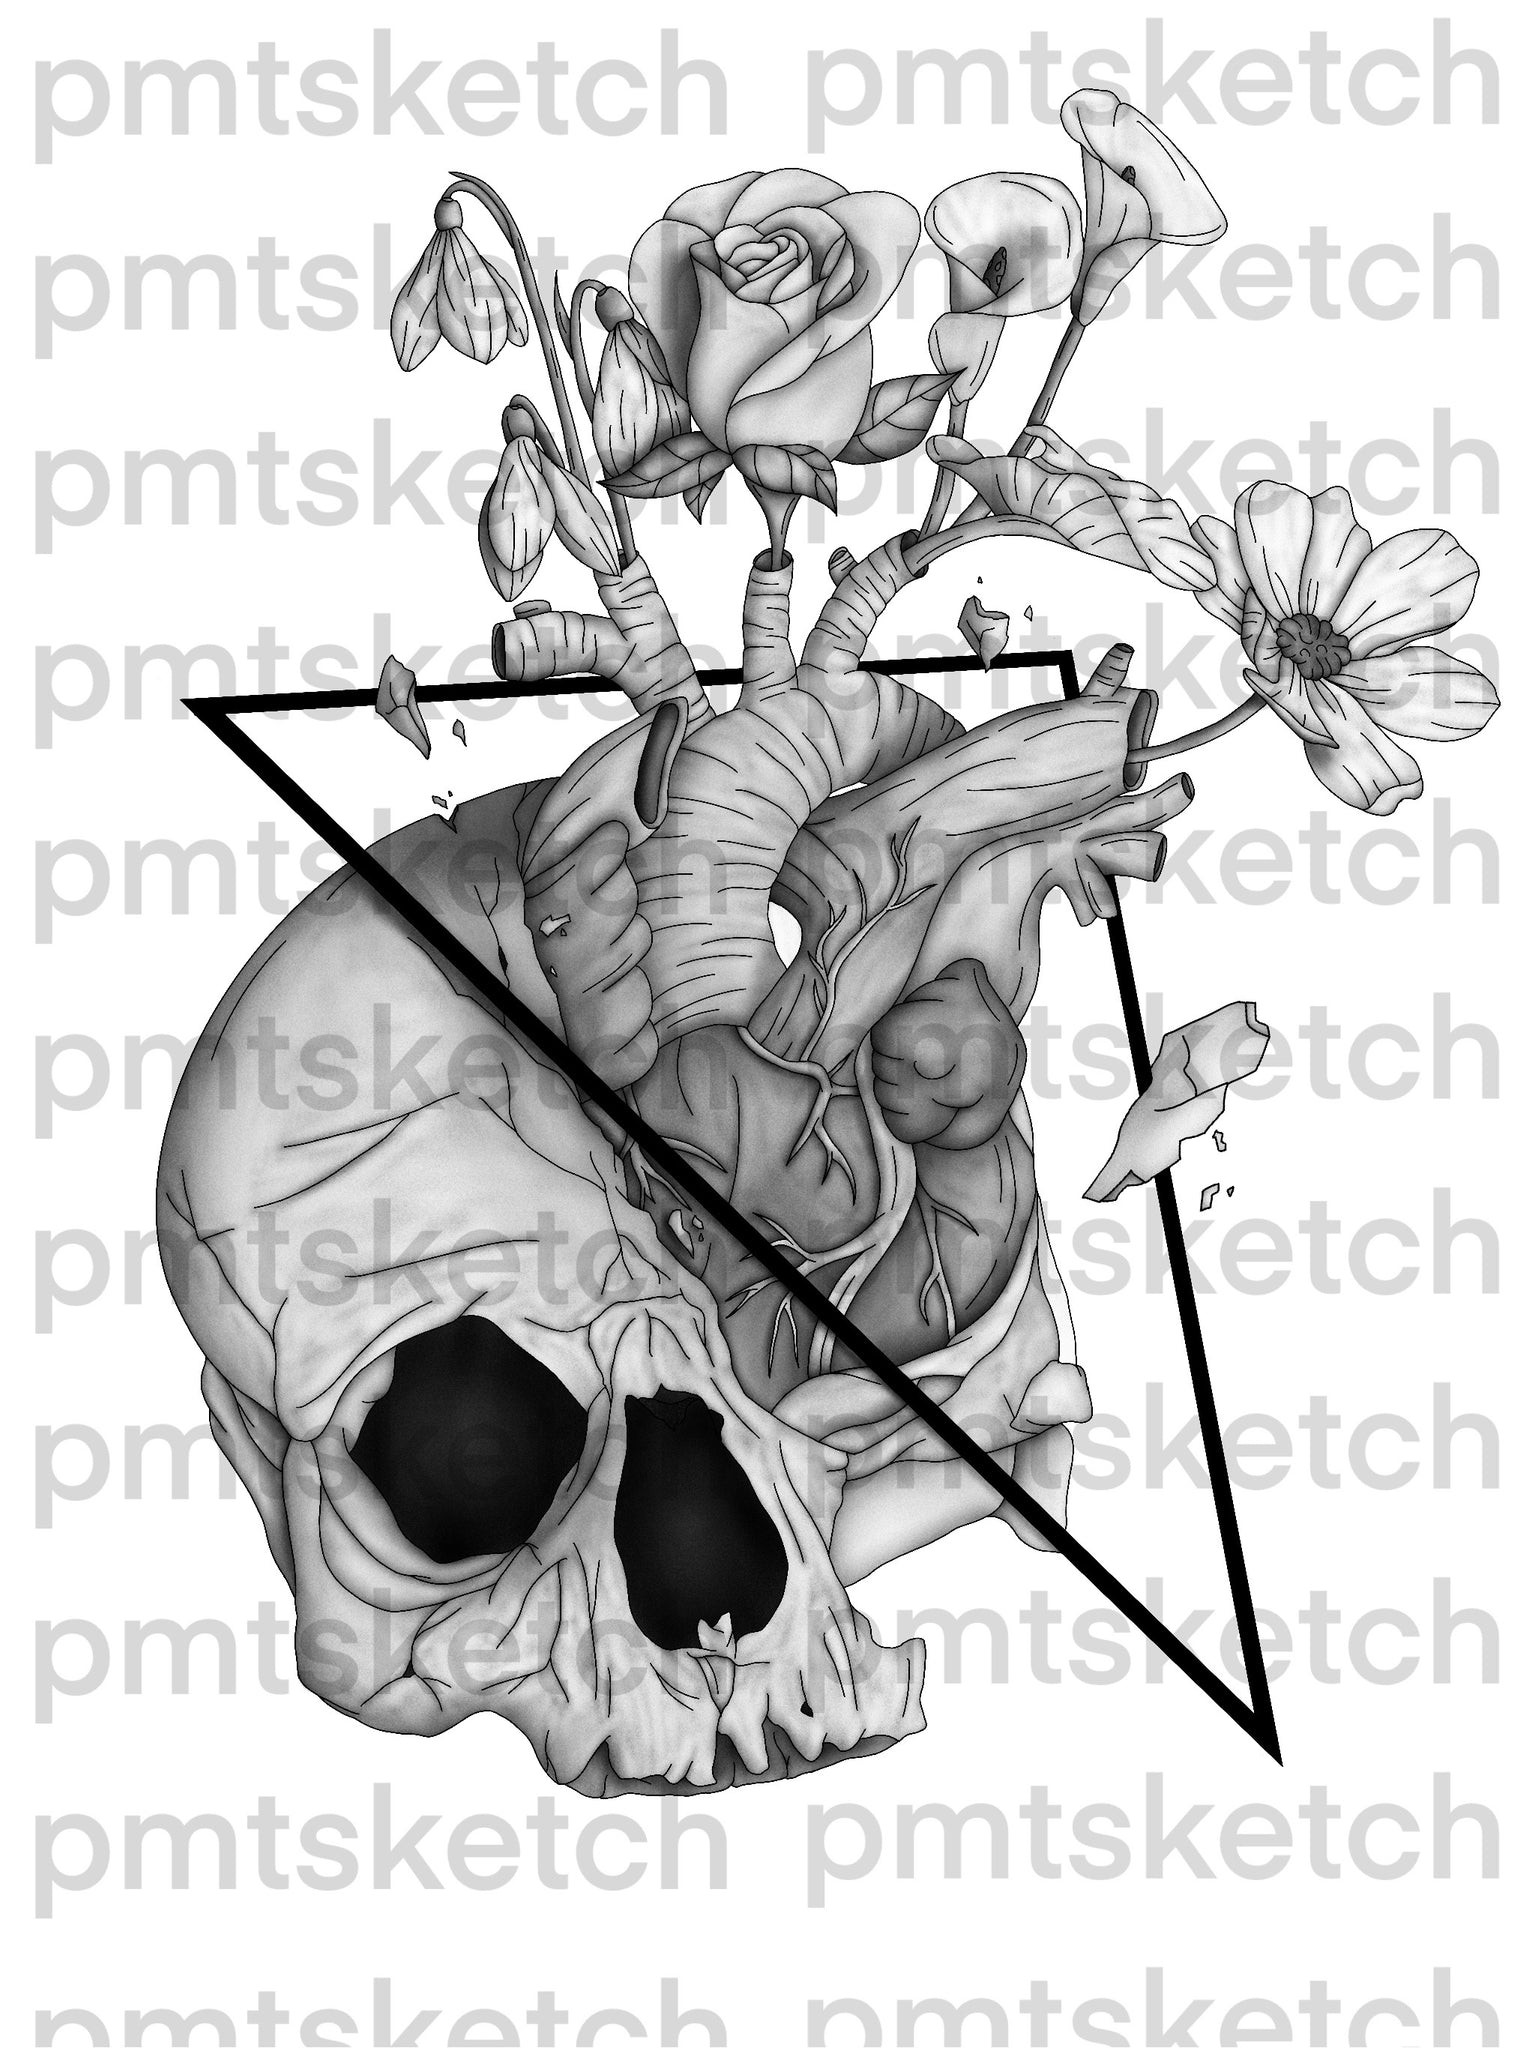 Shaded Skull / Human Heart / Flowers